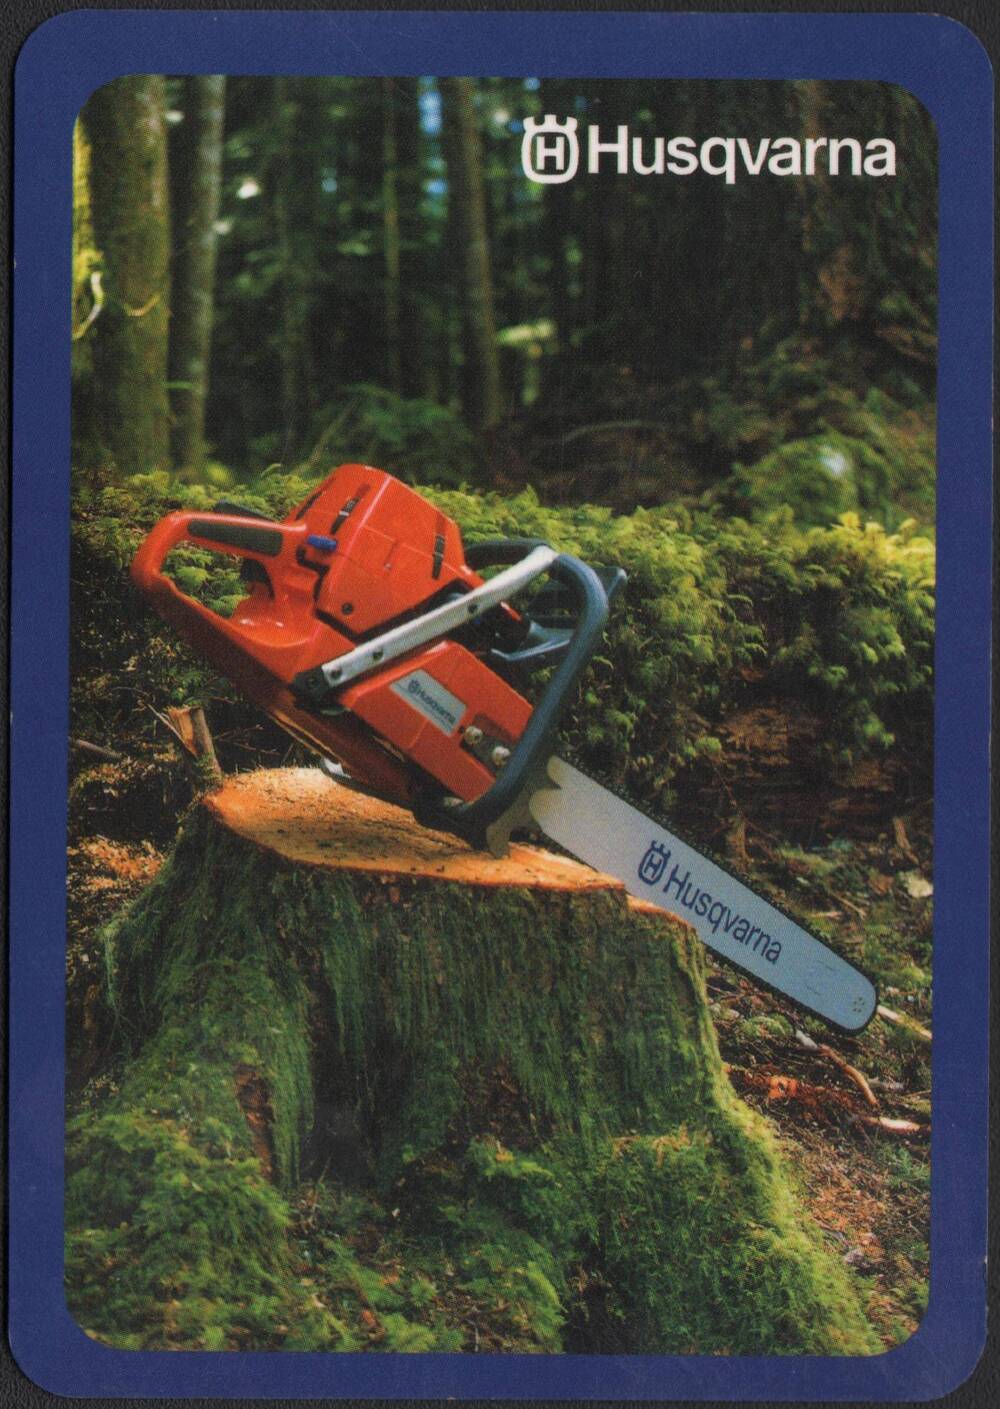 Календарик цветной на 2002 год Husqvarna. Шведская техника для леса, парка и сада